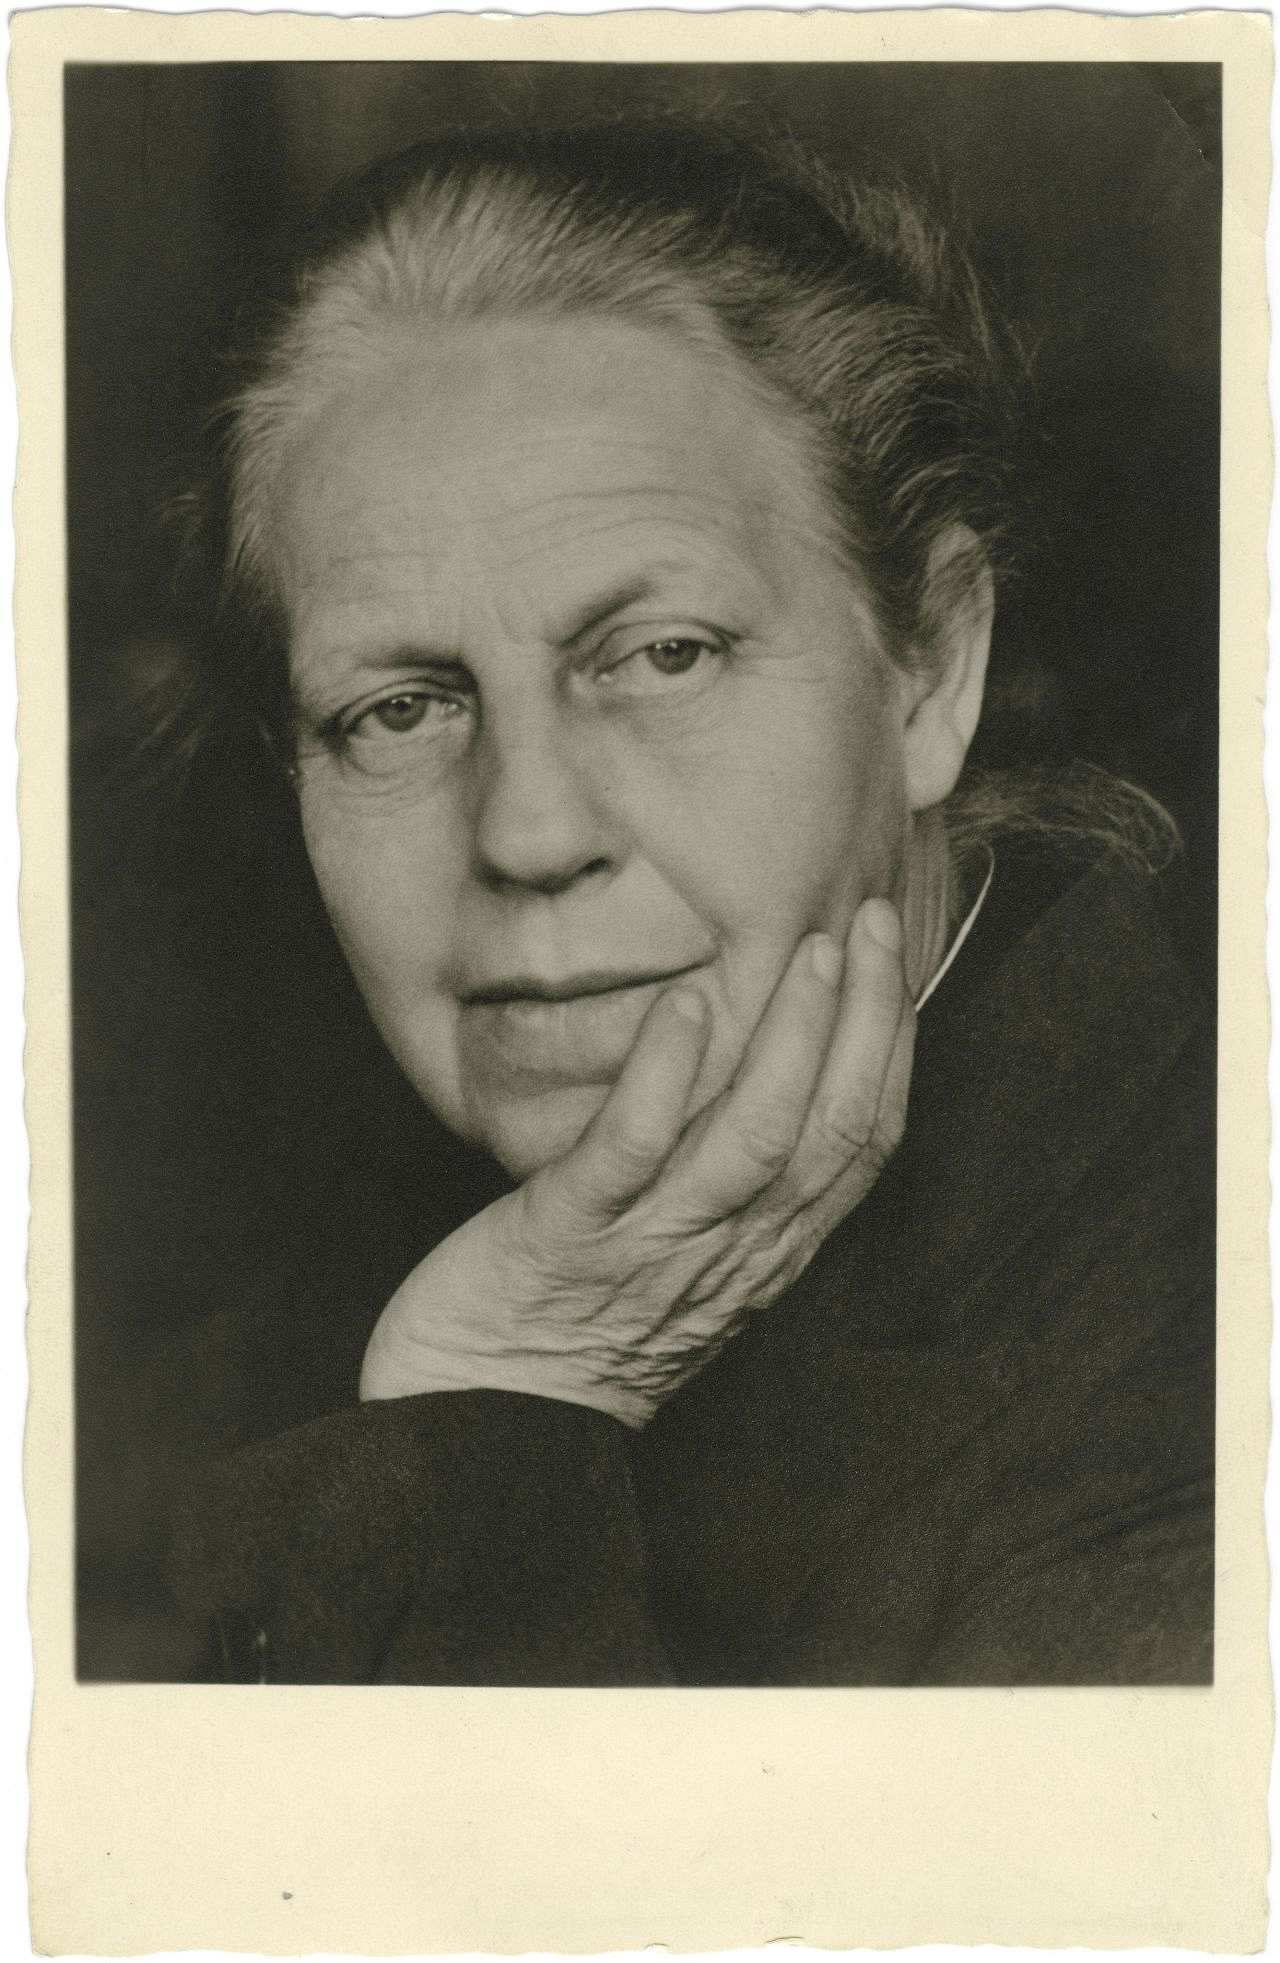 Kopfporträt der CDU-Politikern Helene Weber mit aufgestütztem Kinn, 1945 - 1962.